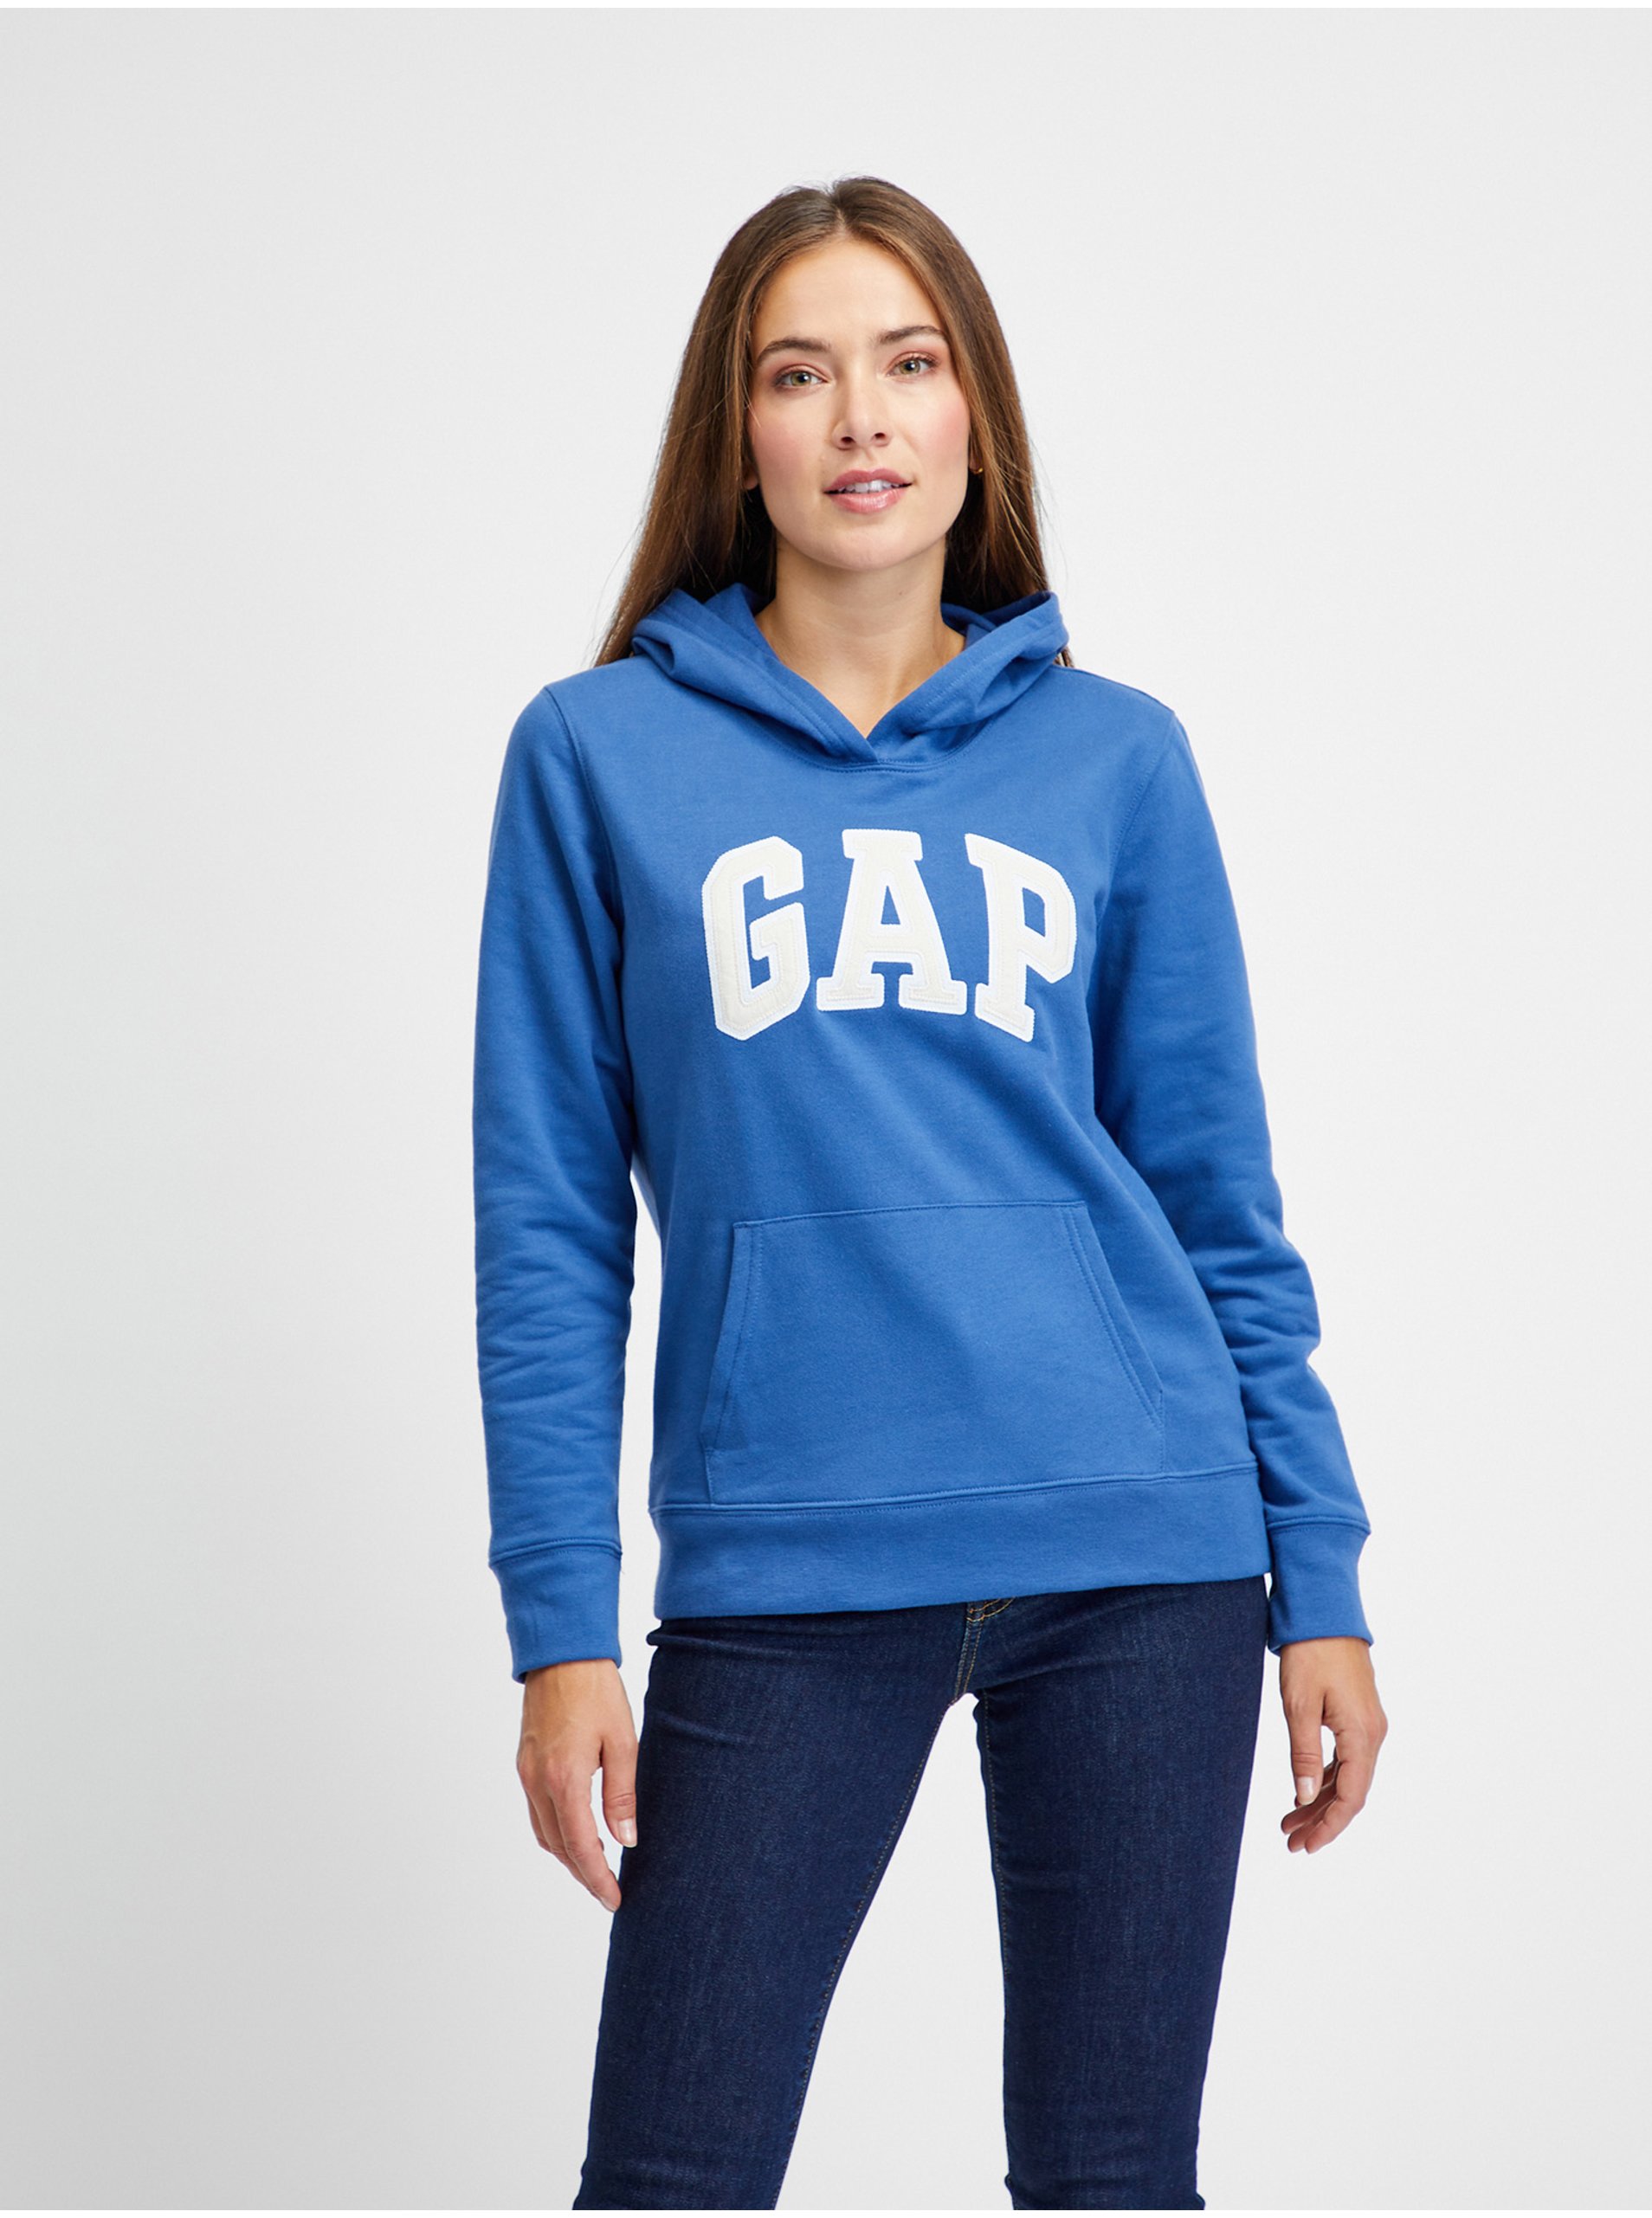 Lacno Modrá dámská mikina s logom GAP